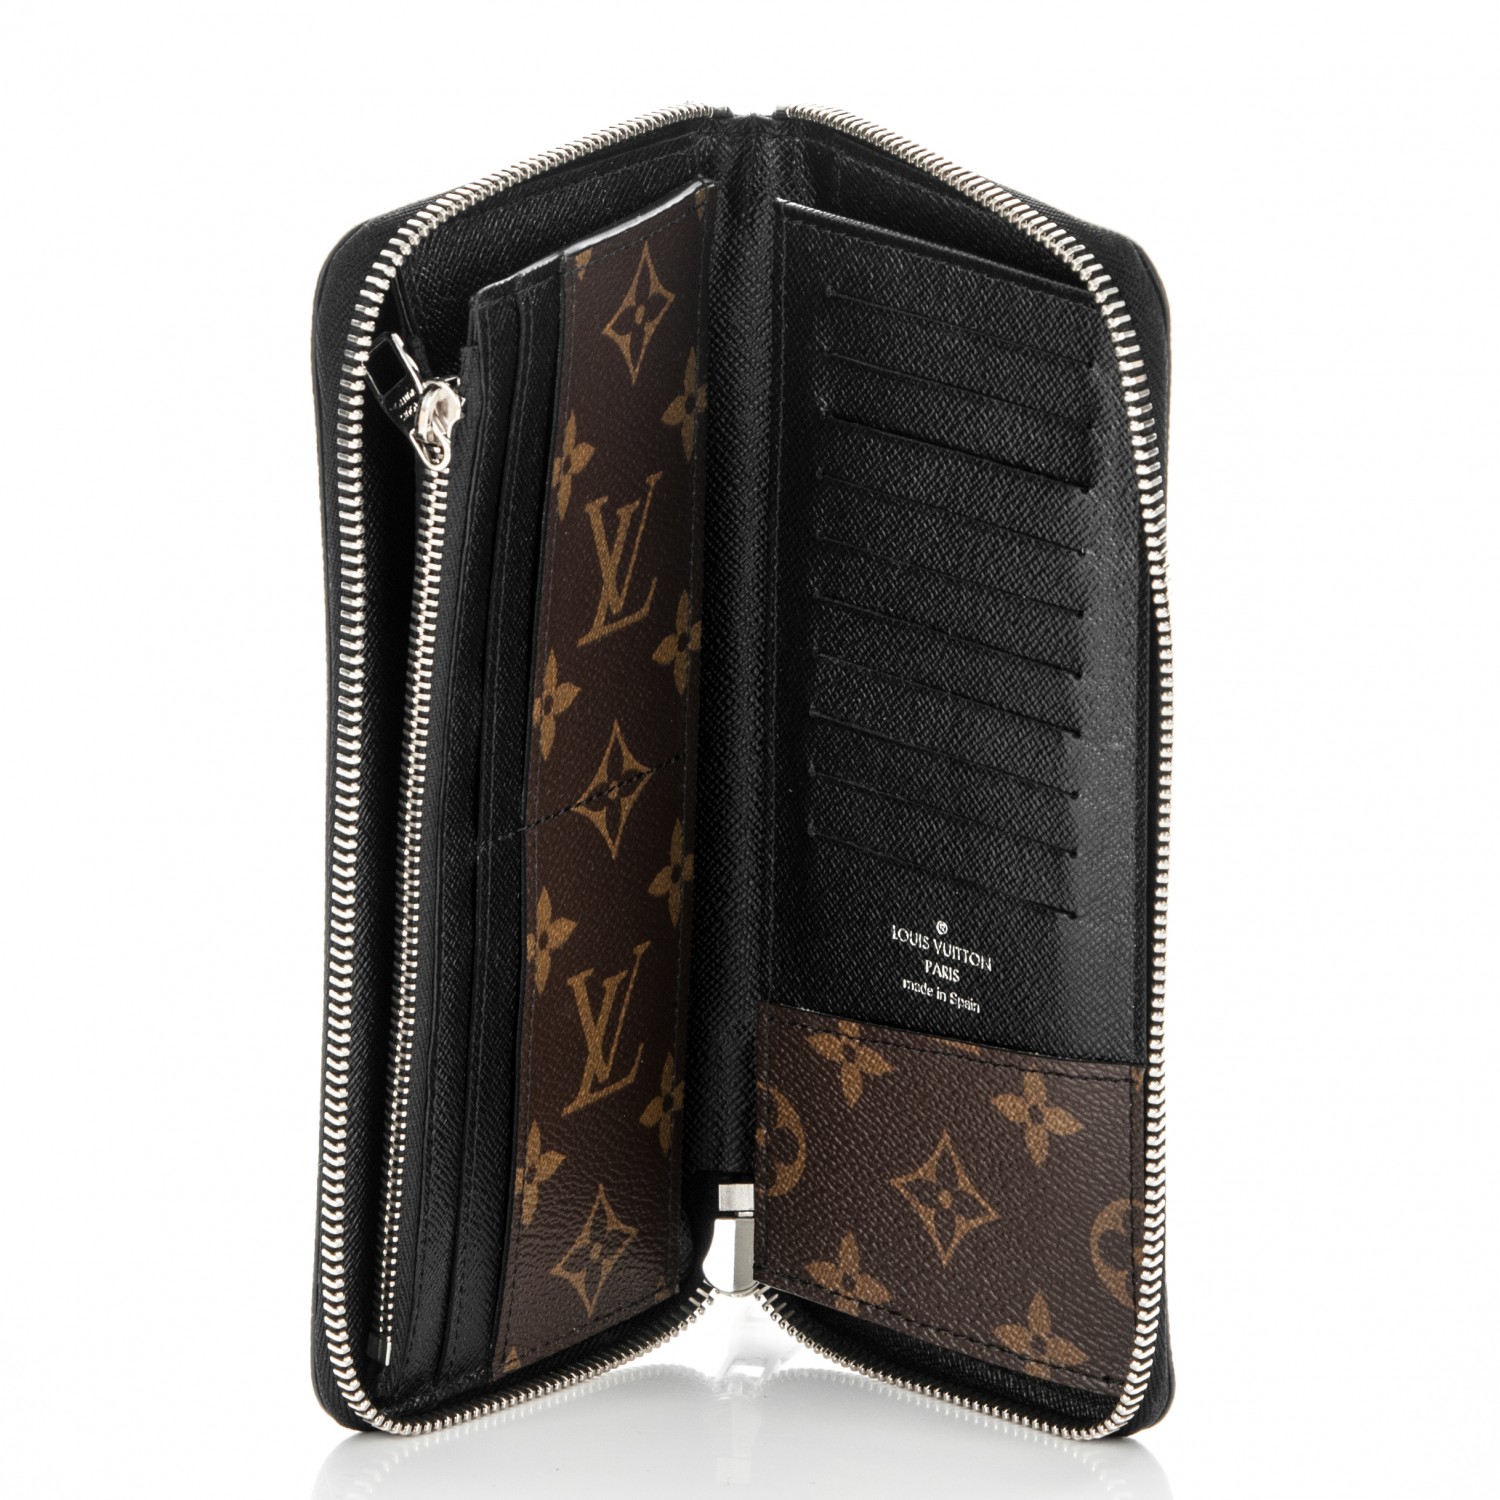 Louis Vuitton Zippy Wallet in black to match the Mazarine bag